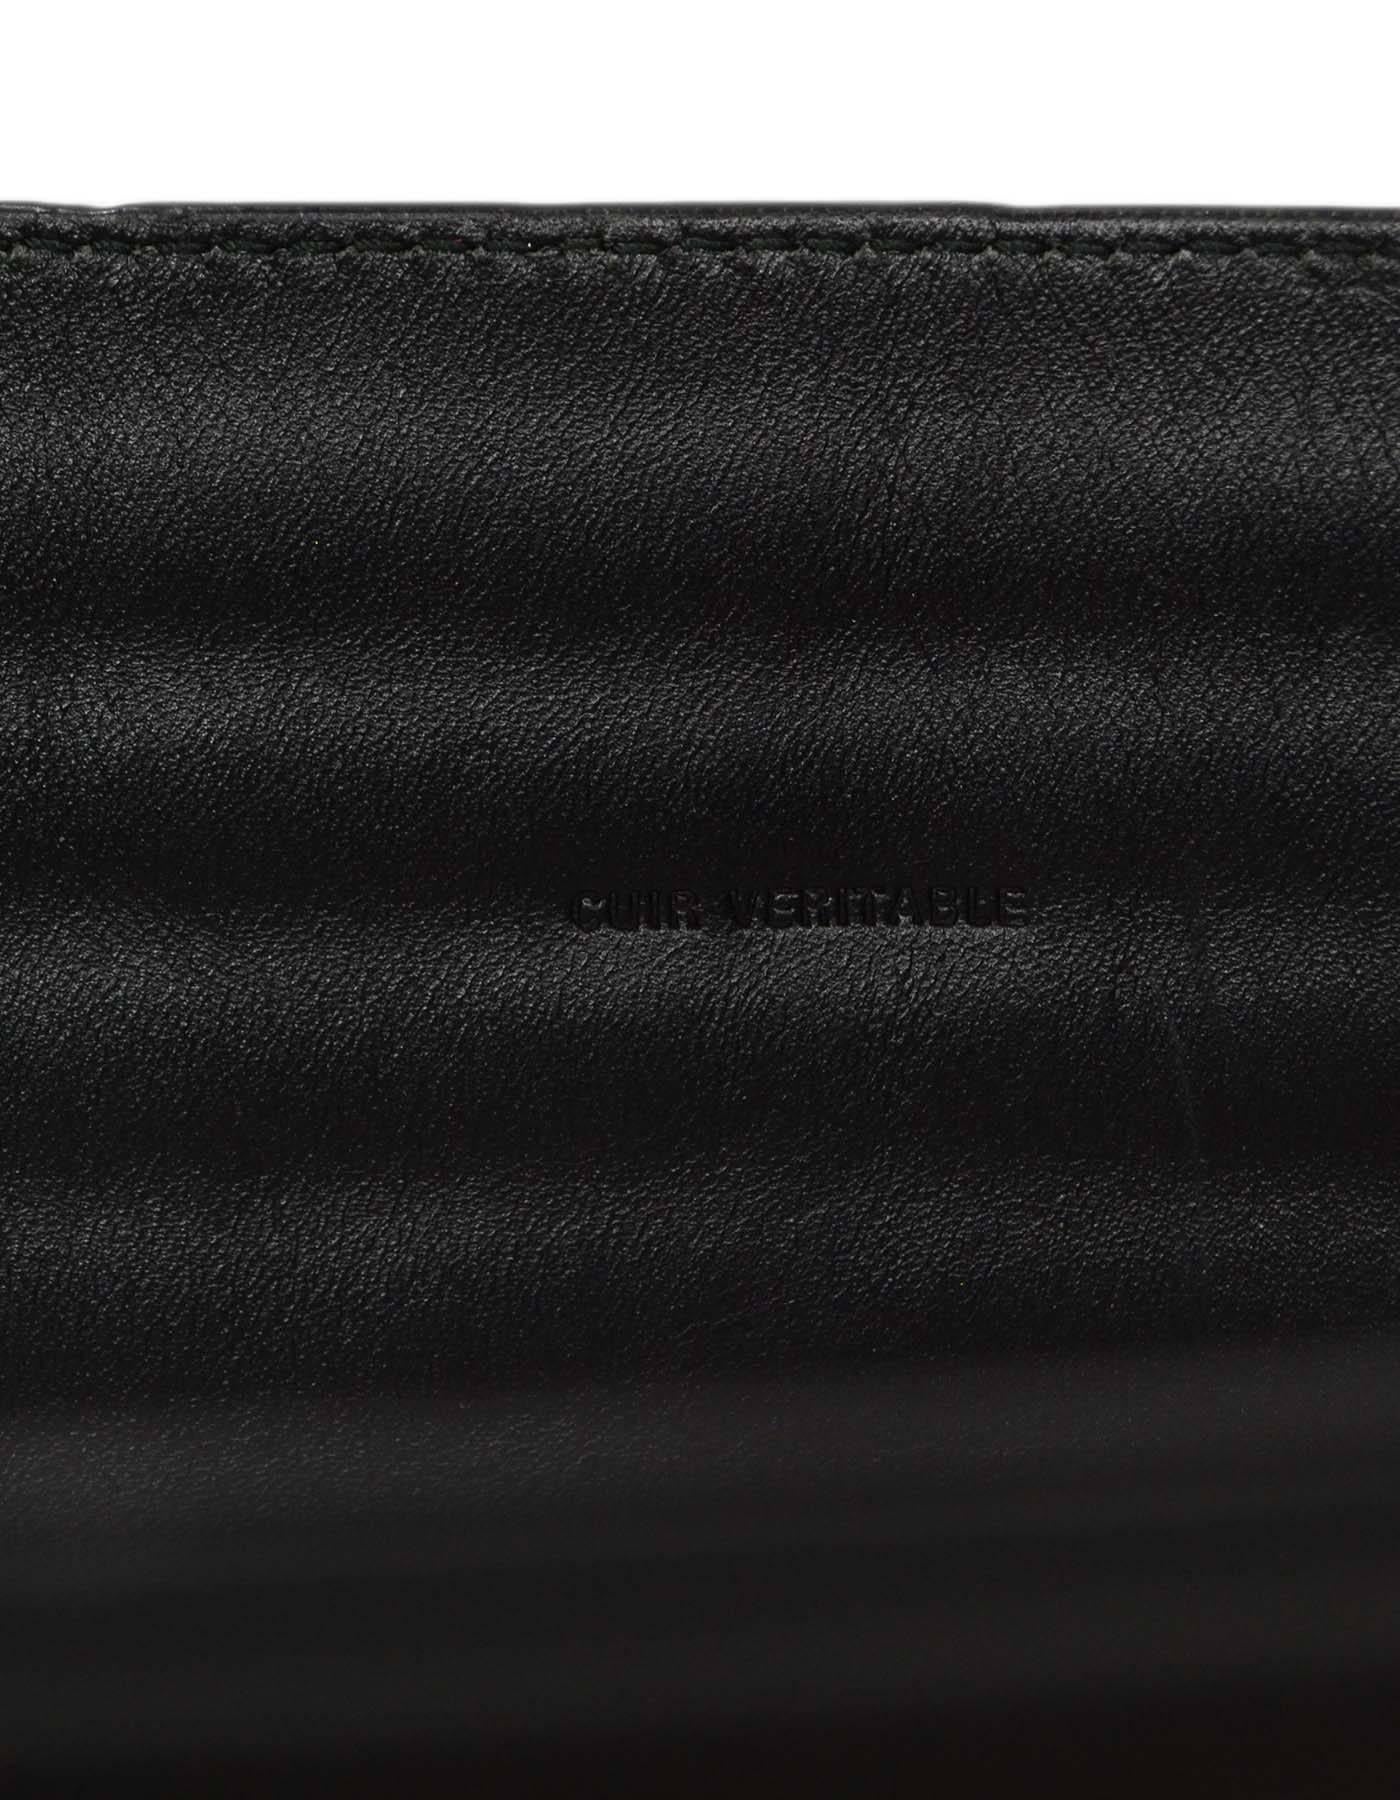 Women's Chanel Black Leather Belt with Boy Buckle Sz 90 rt. $1, 400